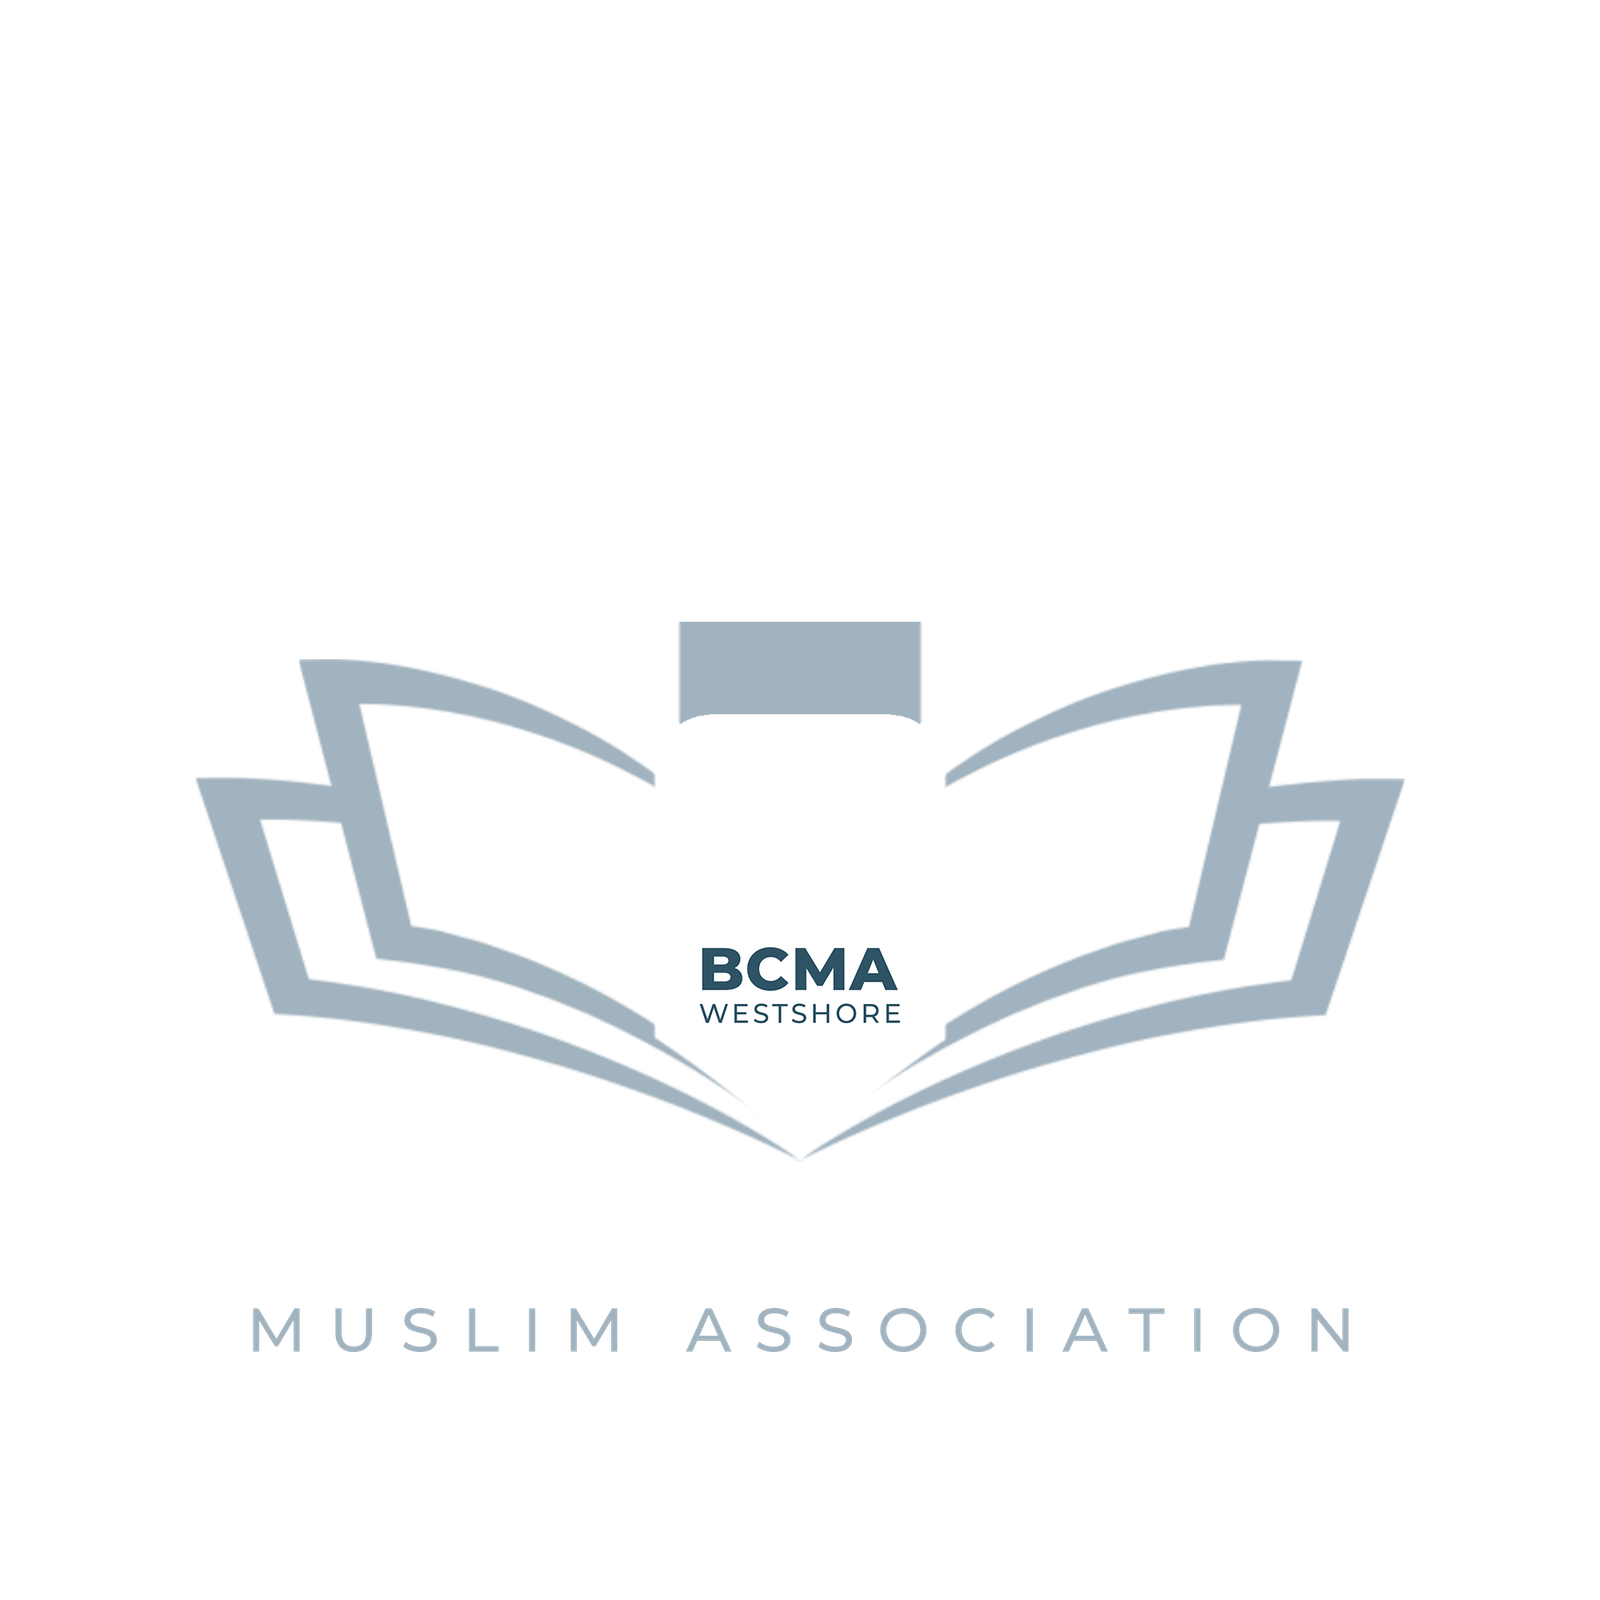 BCMA WestShore